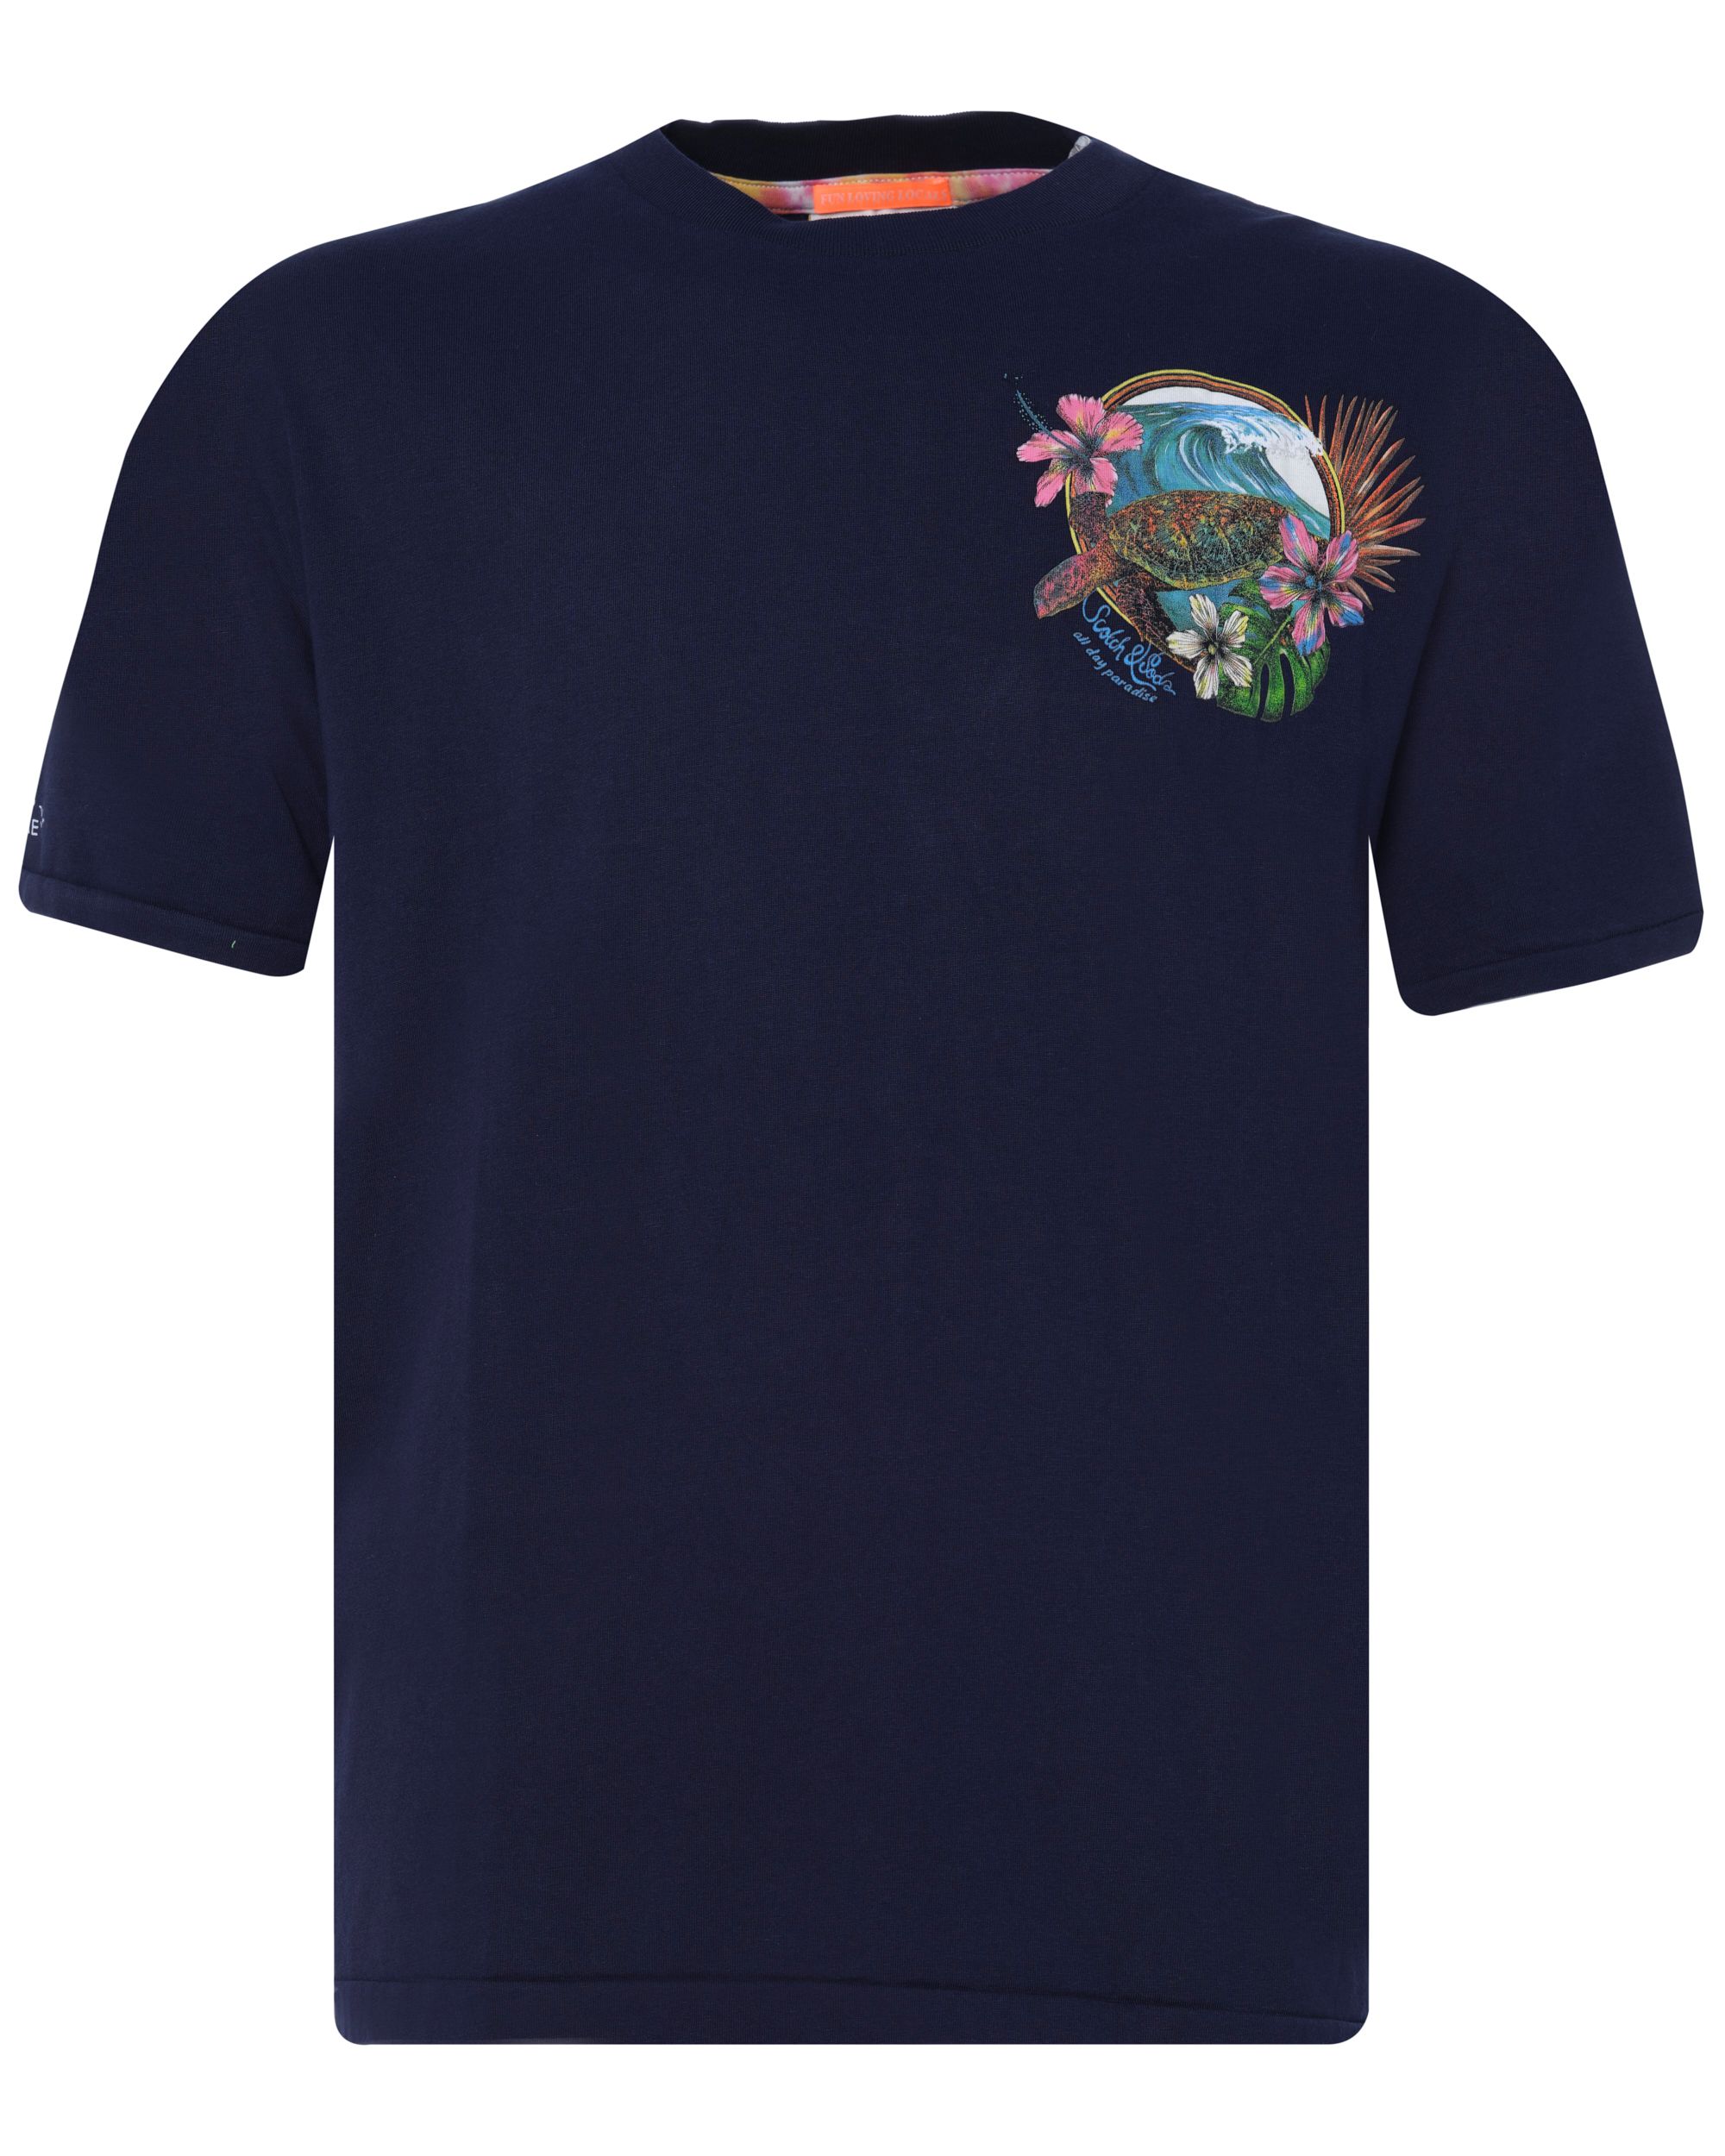 Scotch & Soda T-shirt KM Donker blauw 075552-001-L